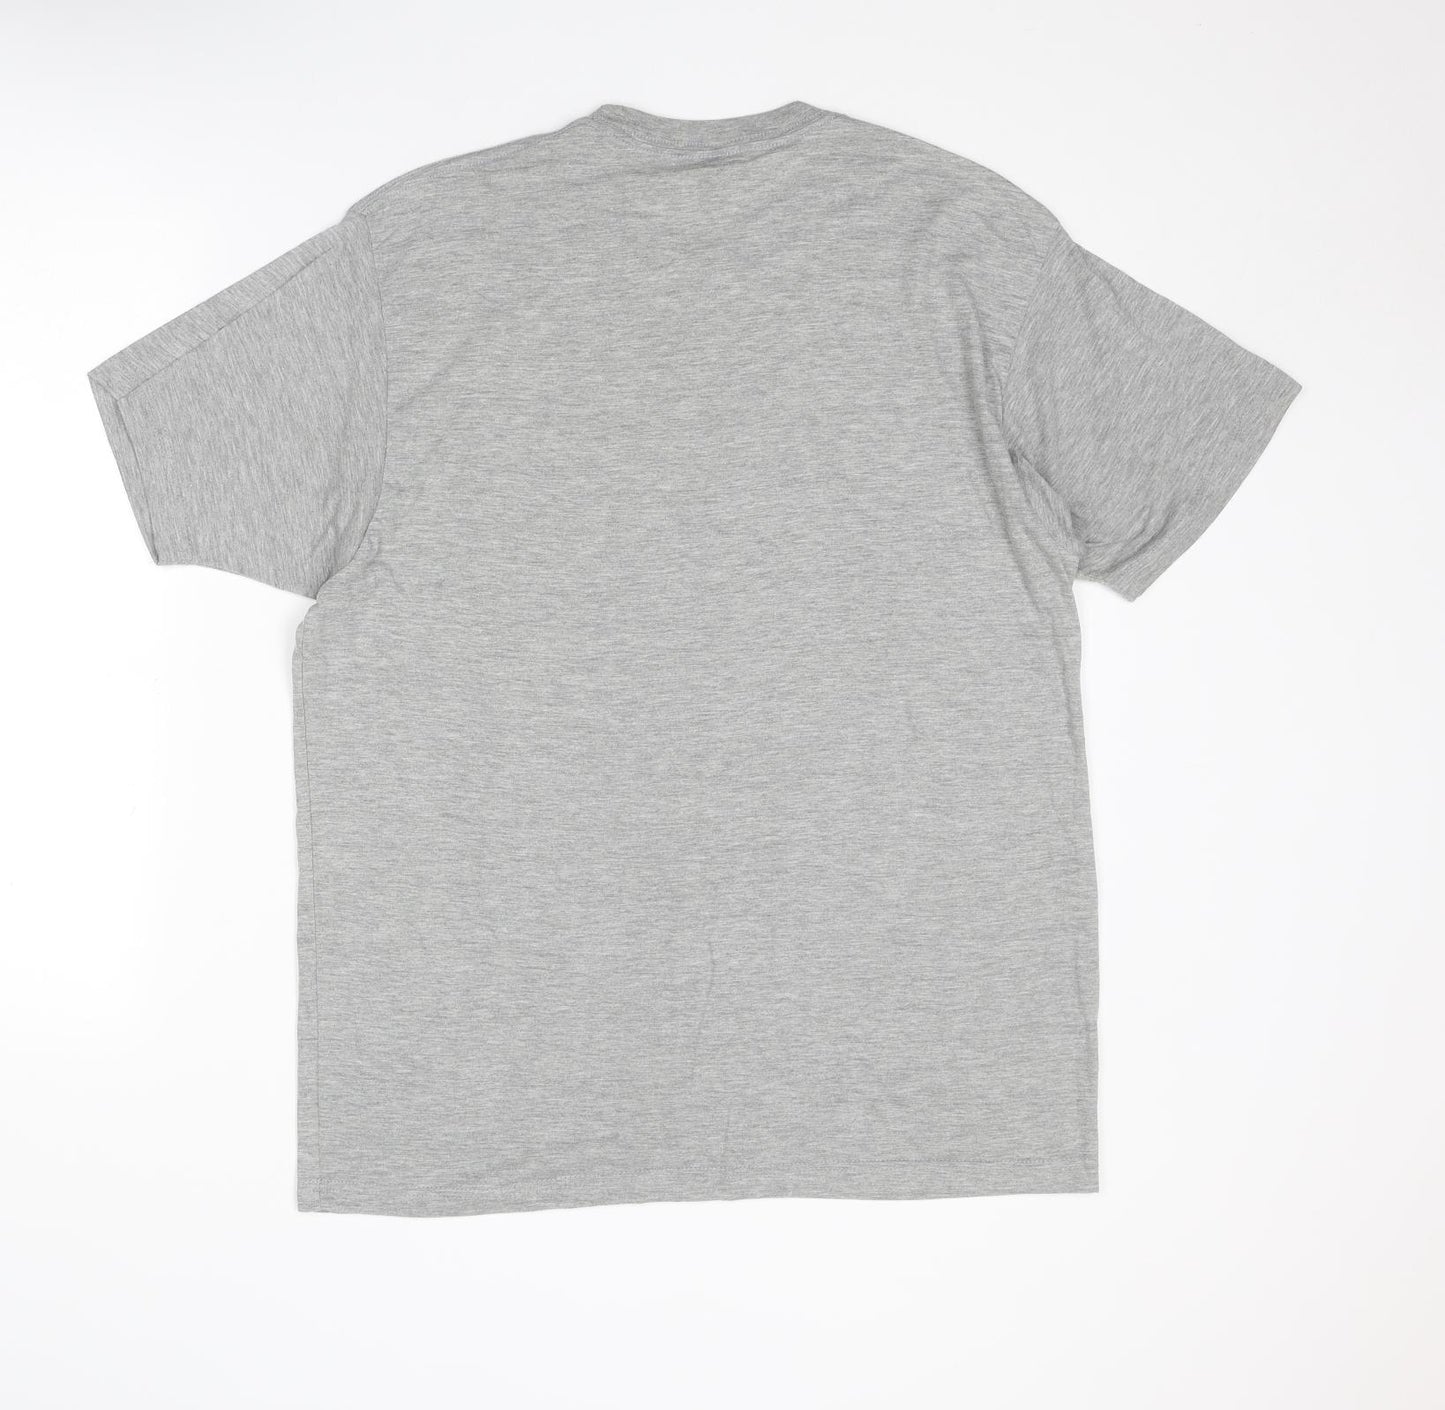 Tultex Mens Grey Polyester T-Shirt Size L Round Neck - Deep Purple